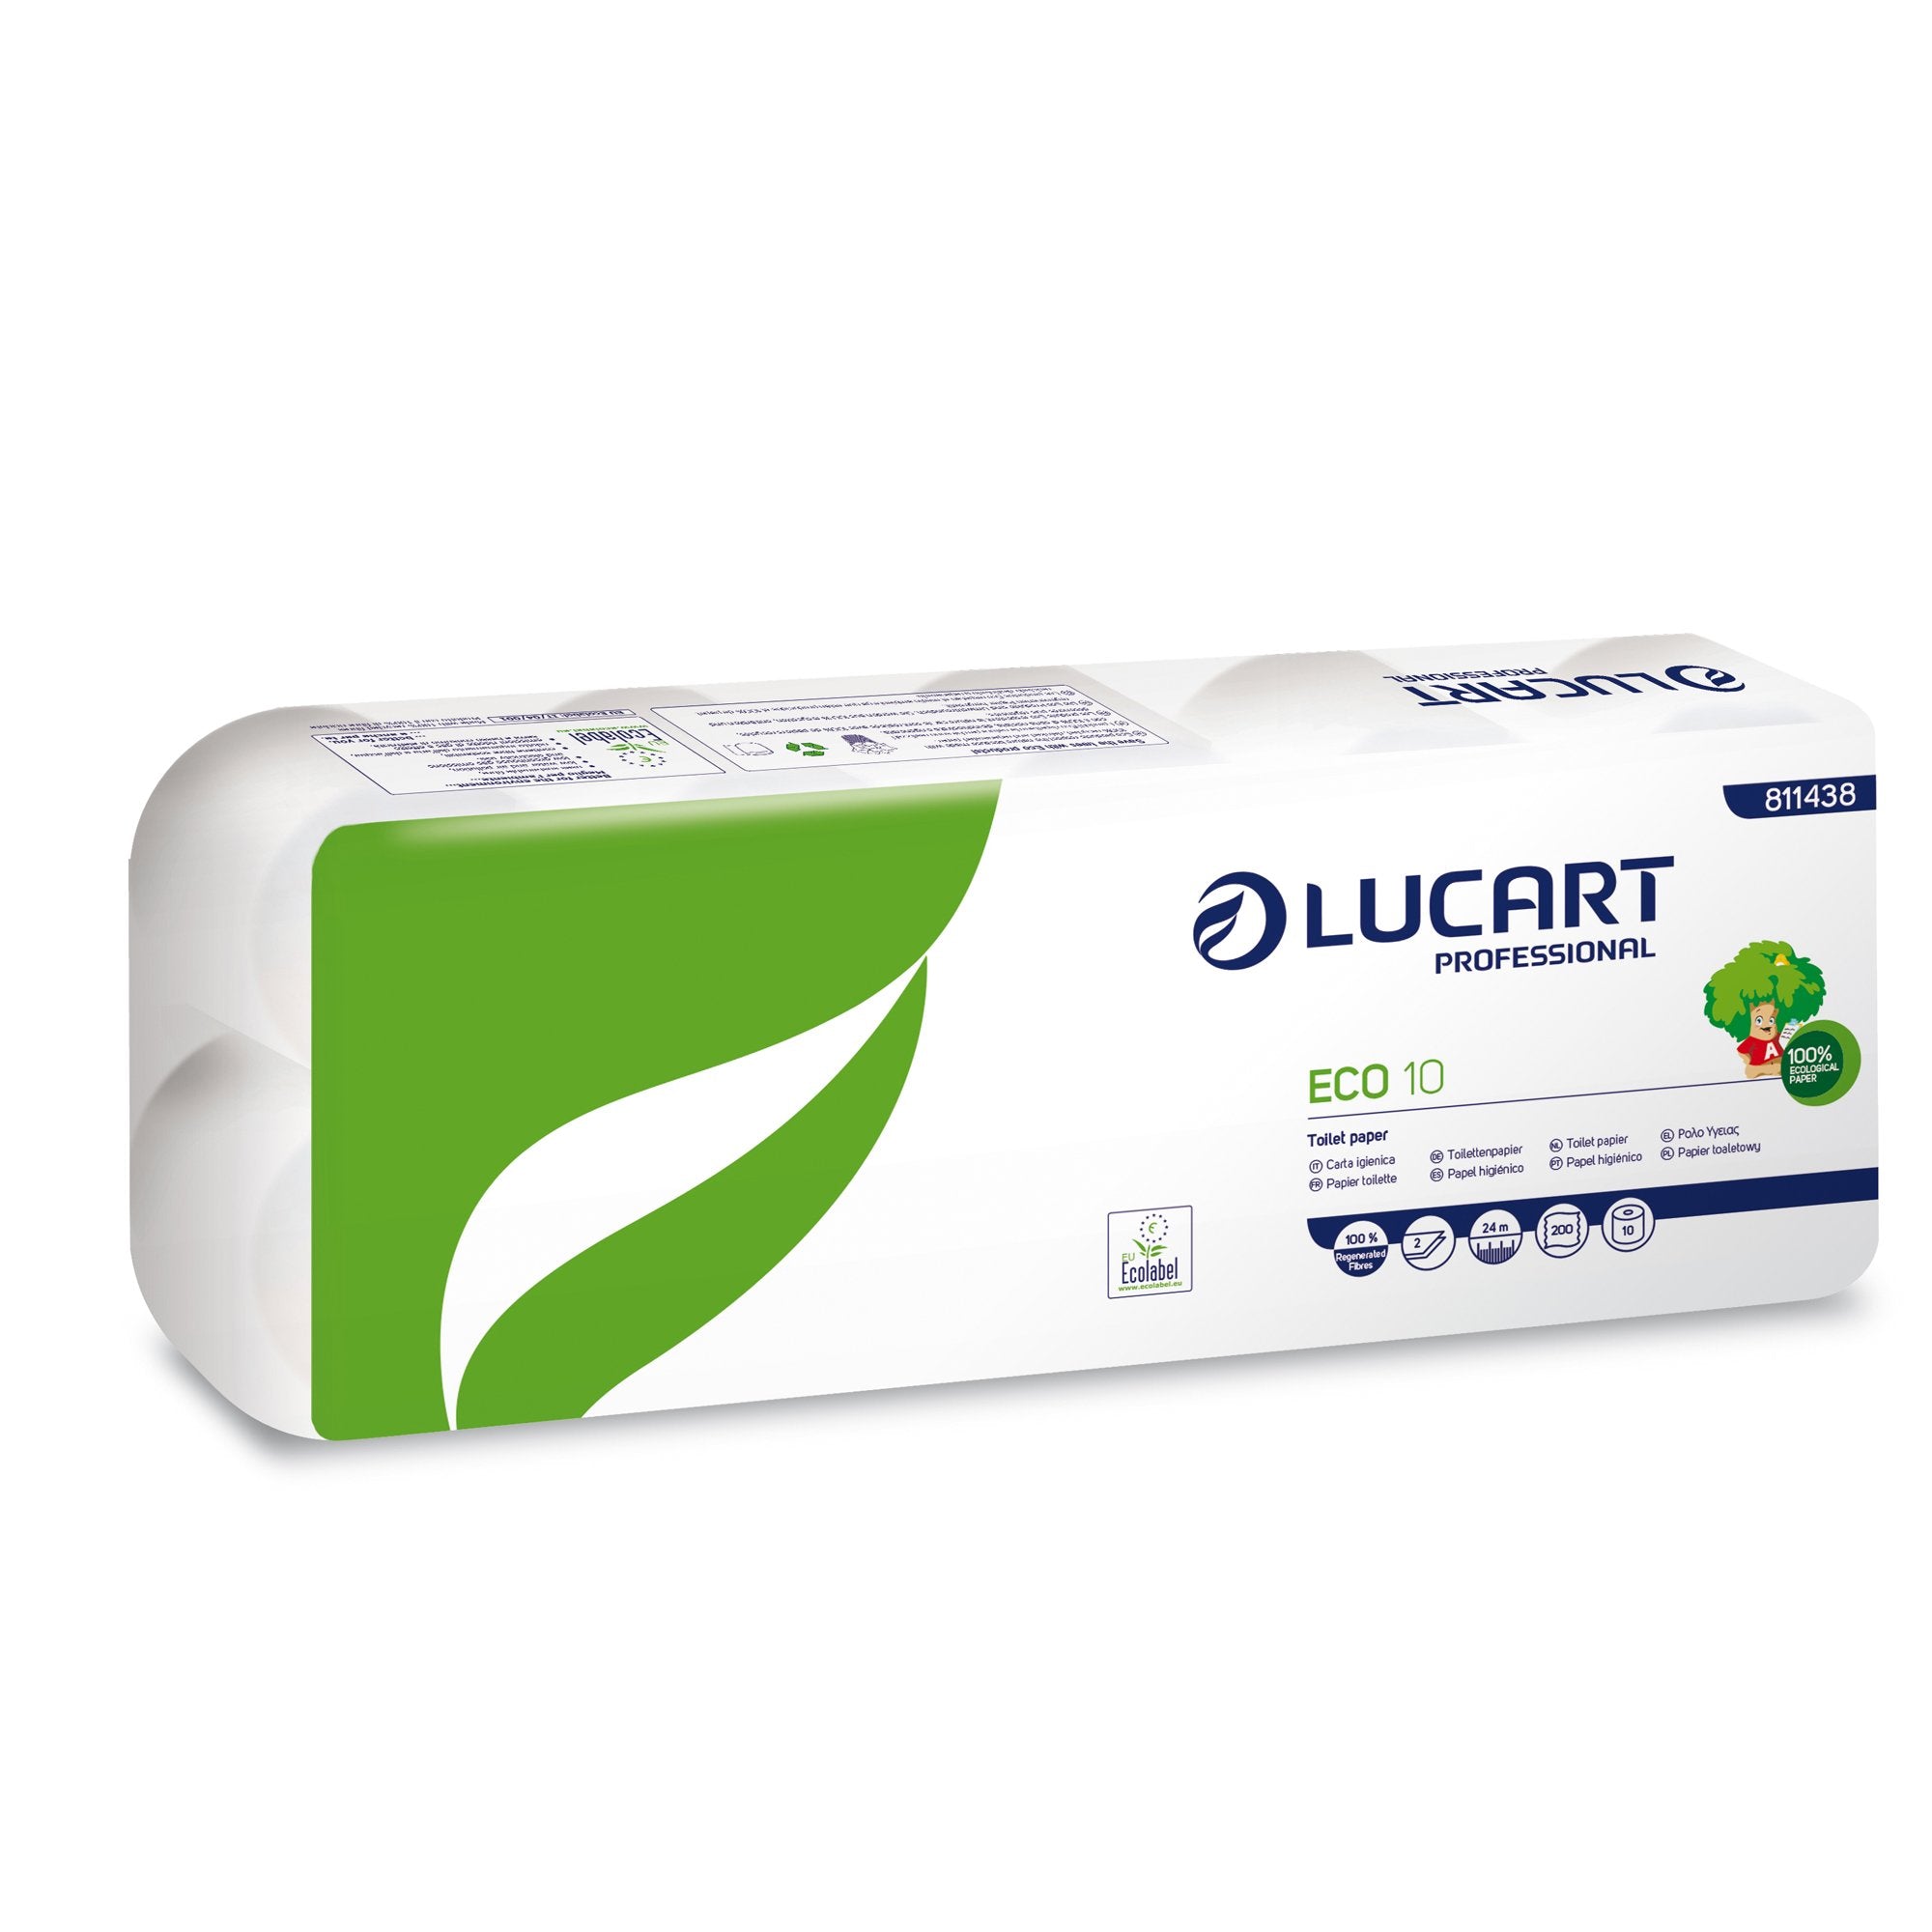 lucart-pacco-10-rotoli-carta-igienica-200-strappi-eco